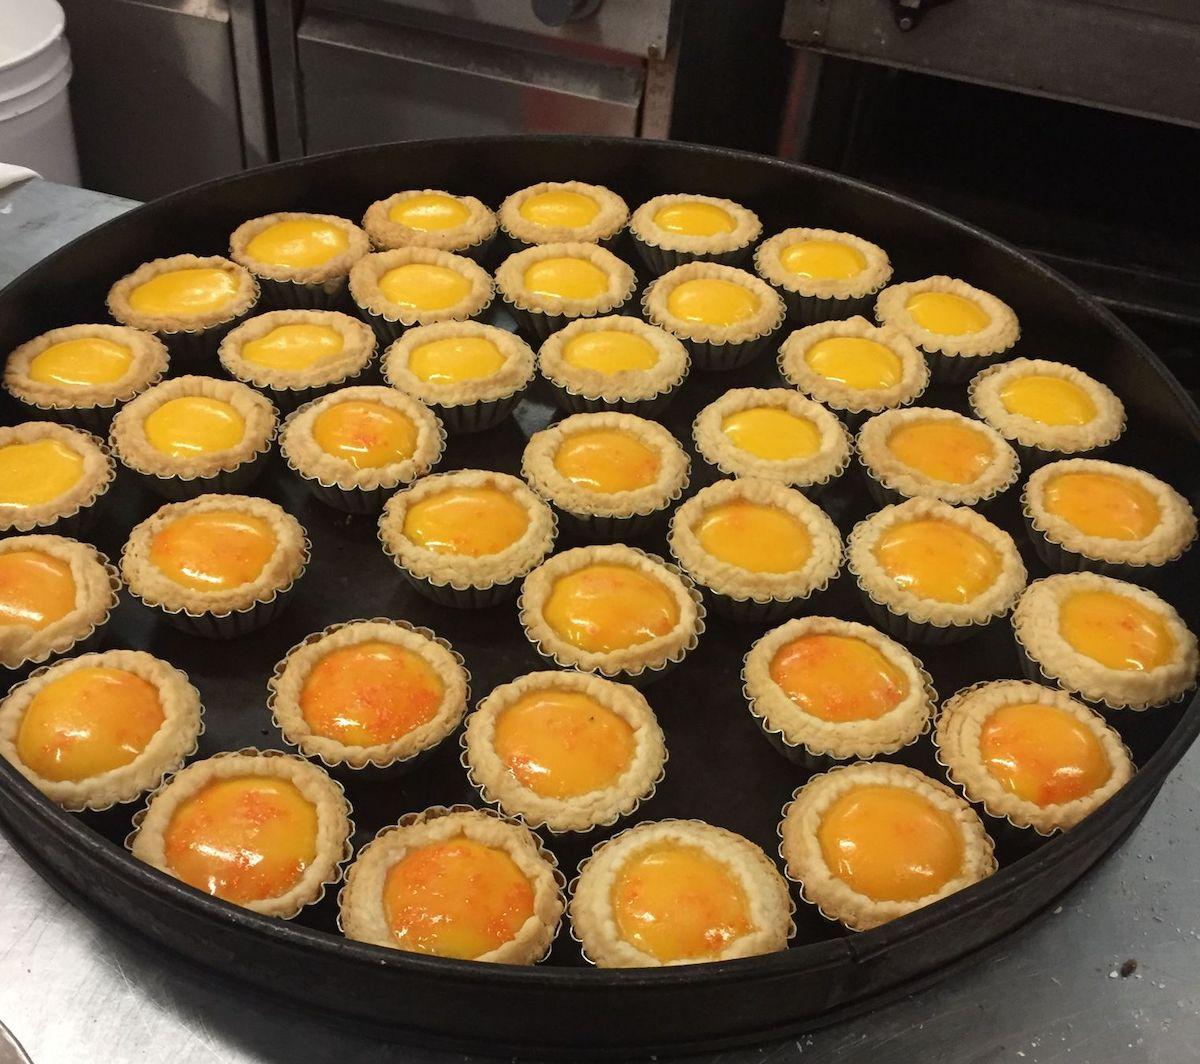 Popular Hong Kong-style dim sum, the egg tarts. (Courtesy of Lai Hung)